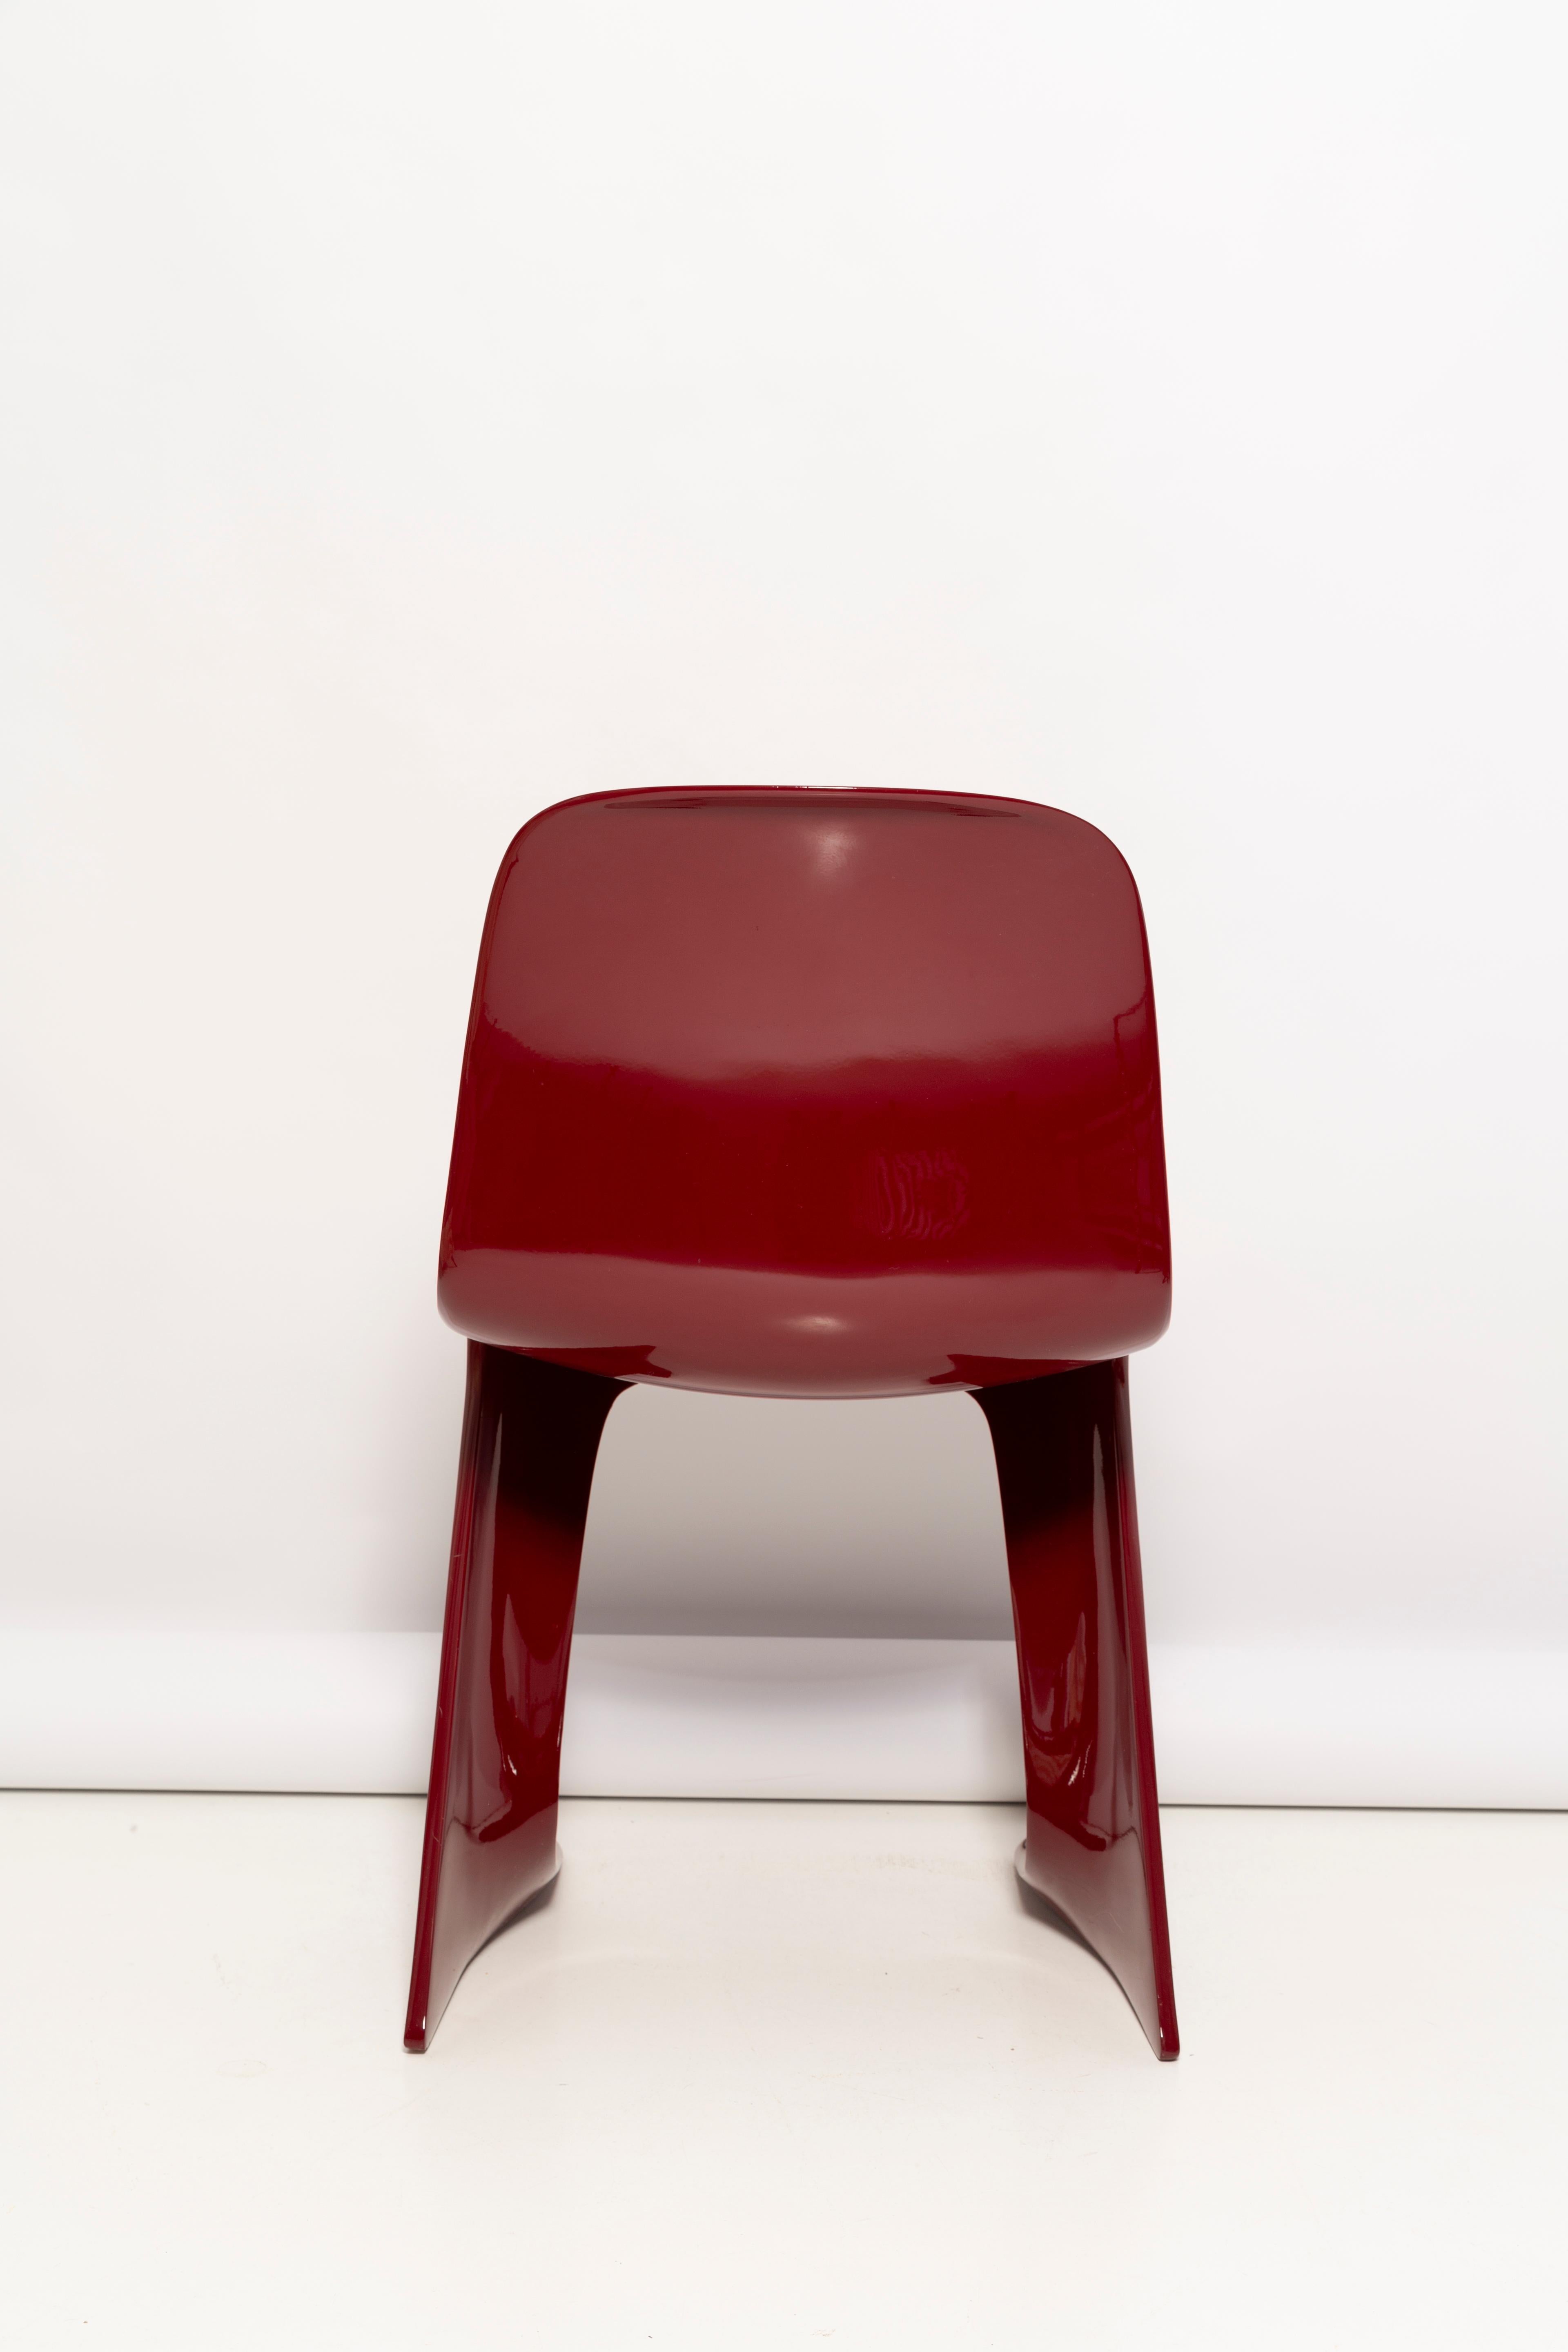 Fiberglass Pair of Dark Red Wine Kangaroo Chairs Designed by Ernst Moeckl, Germany, 1968 For Sale